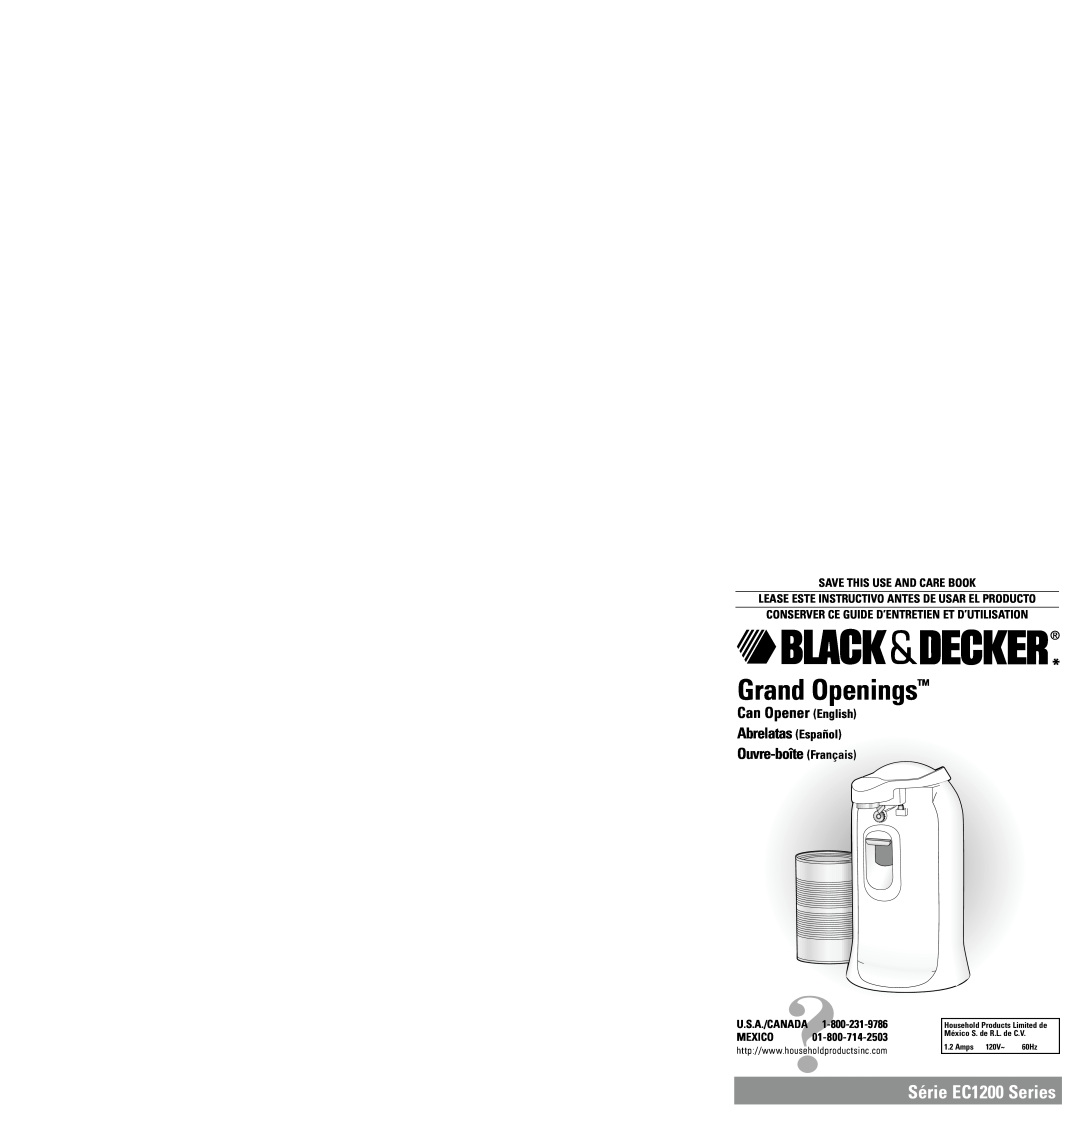 Black & Decker EC1200B warranty Grand Openings, Série EC1200 Series, Can Opener English Abrelatas Español, Amps 120V~ 